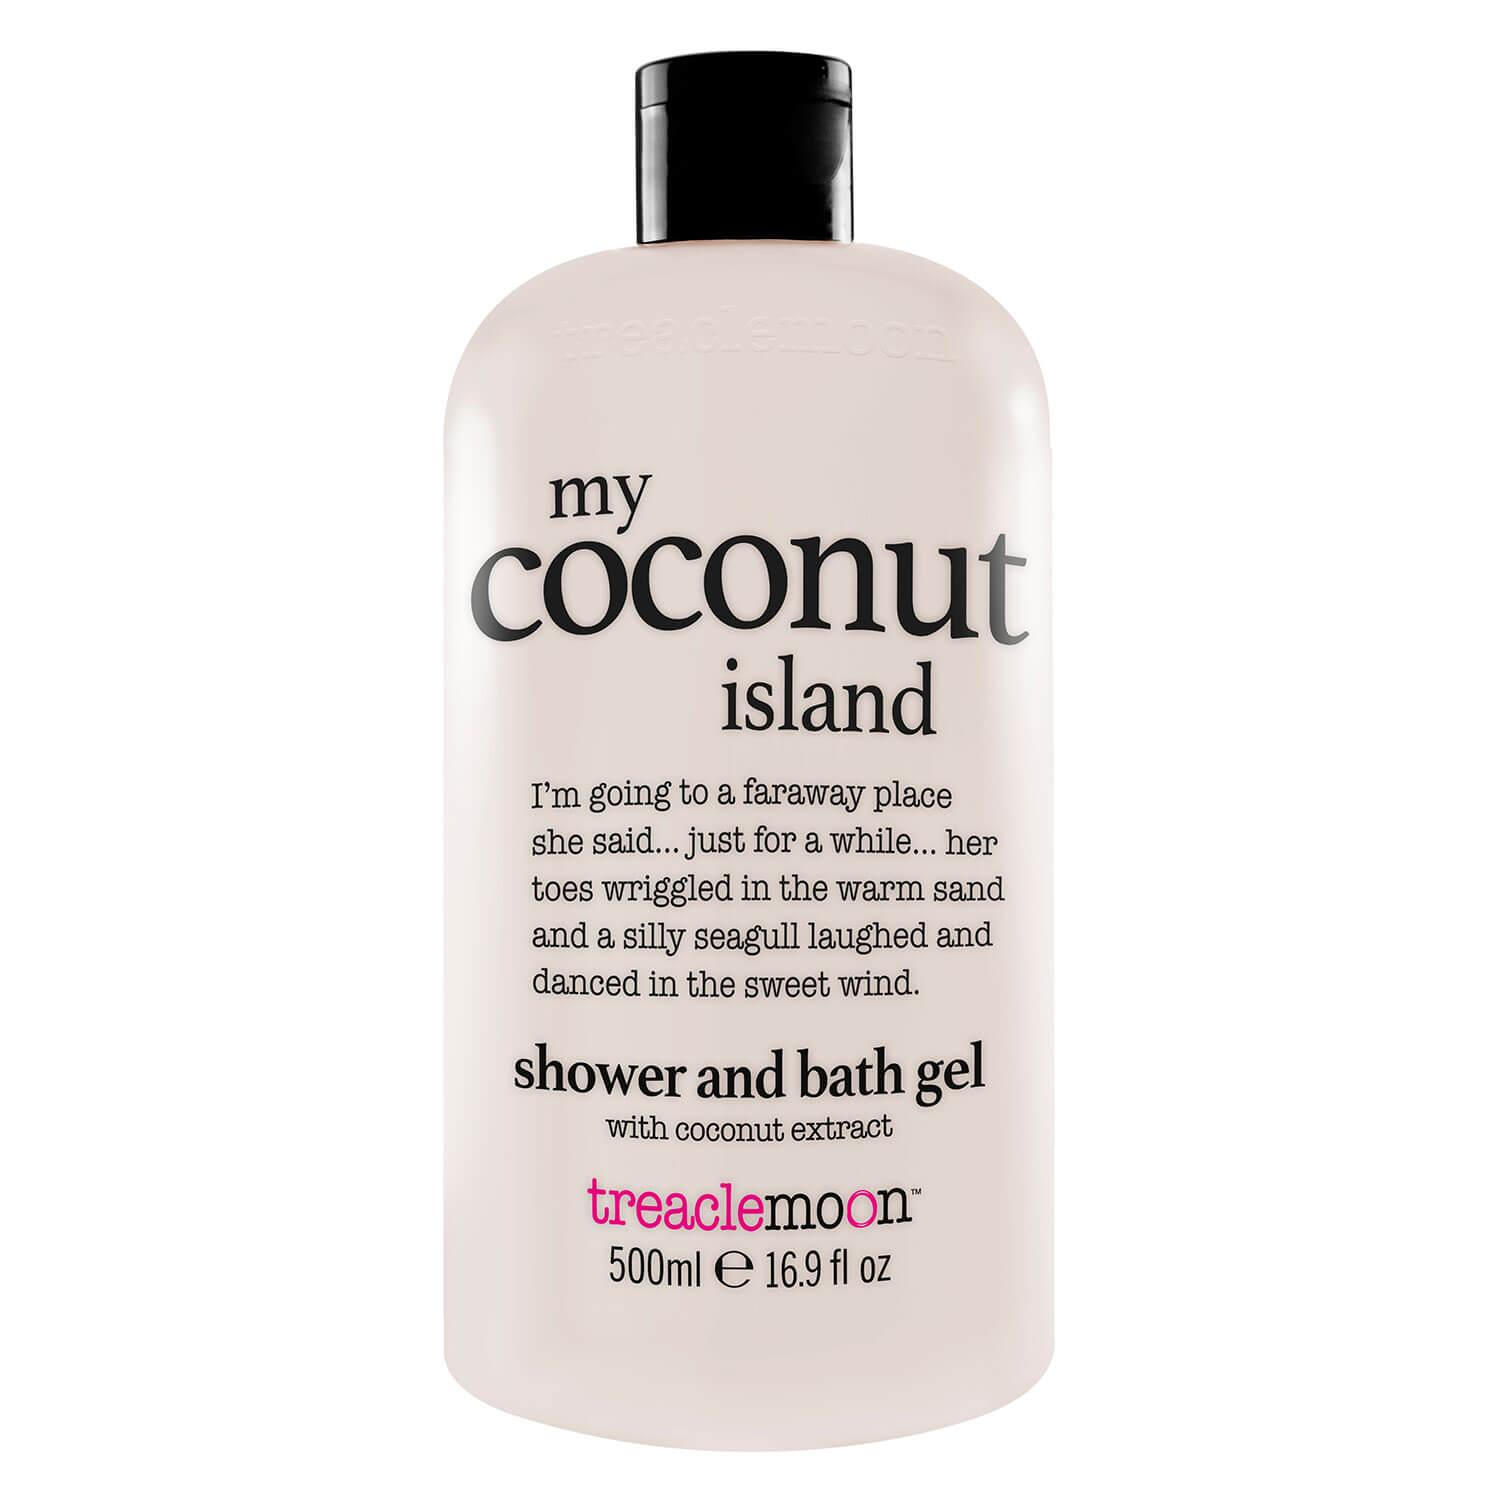 treaclemoon - my coconut island shower and bath gel